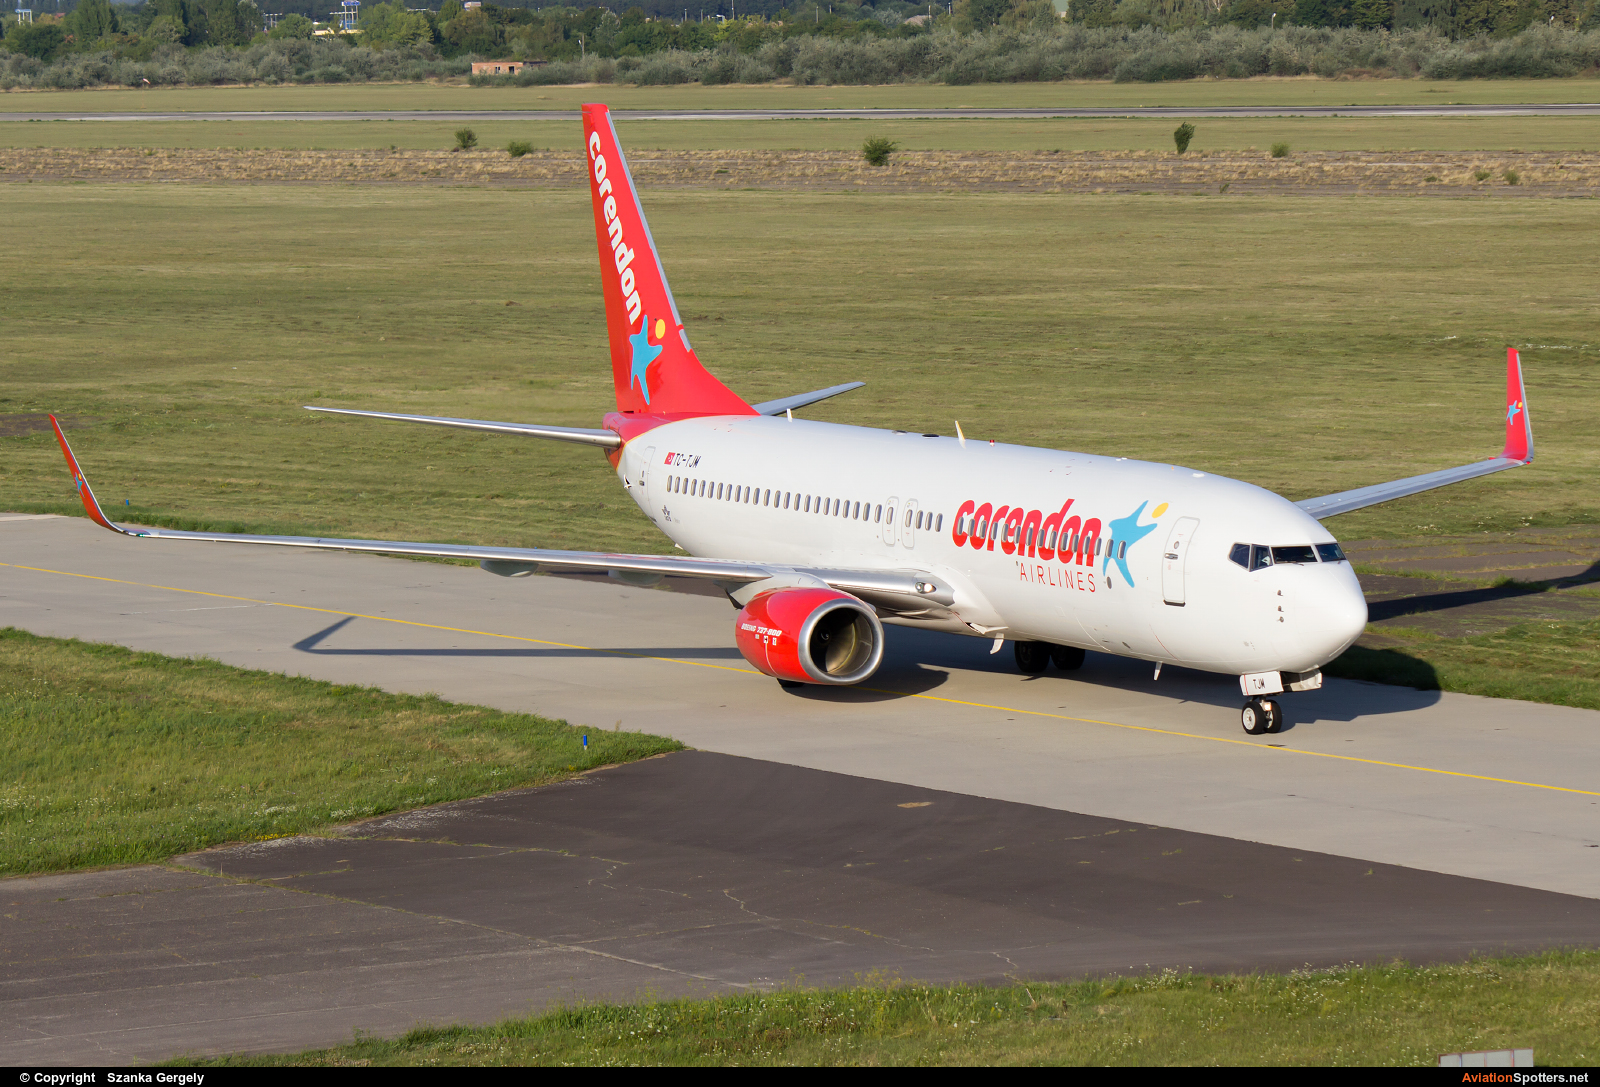 Corendon Airlines  -  737-800  (TC-TJM) By Szanka Gergely (TaxisGeri)